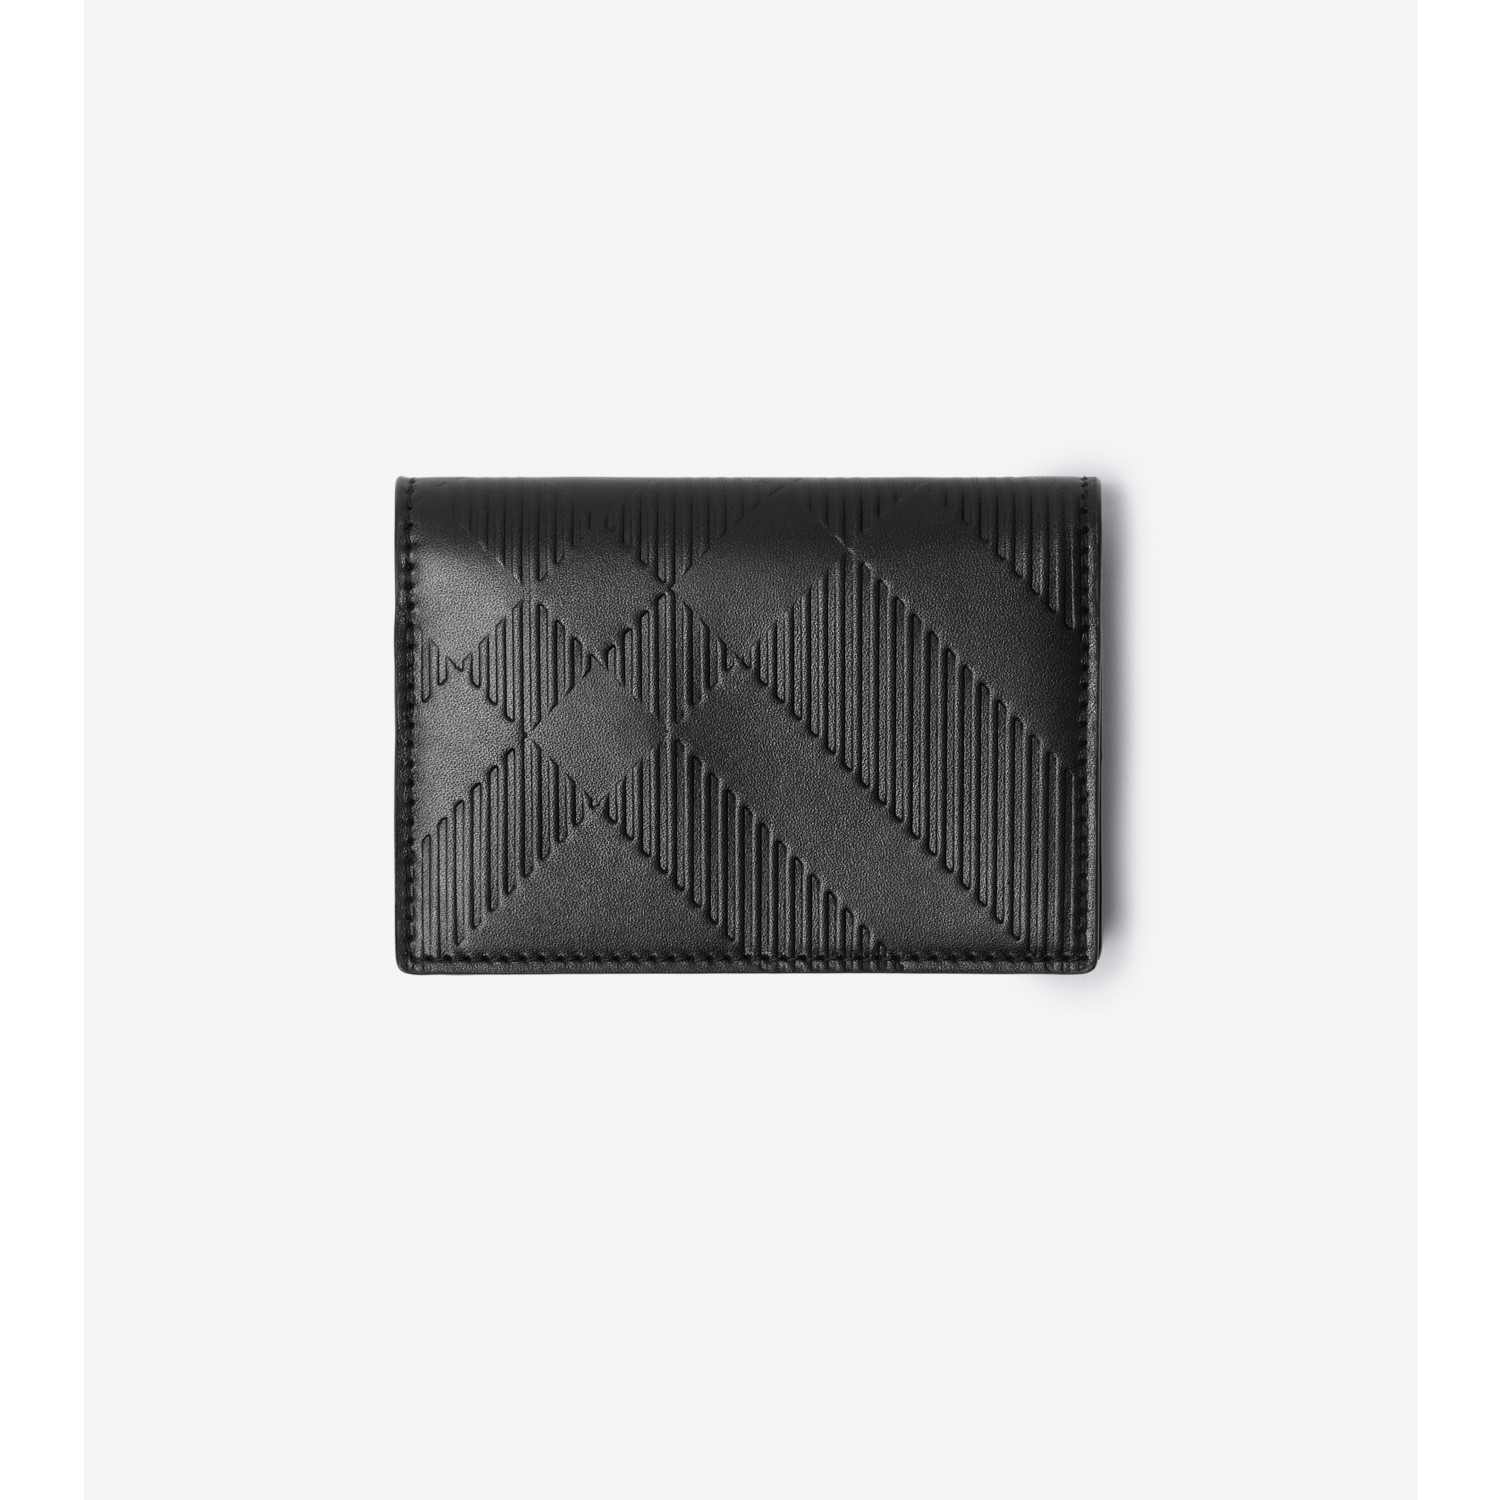 Burberry Cardholder With Strap in Black for Men